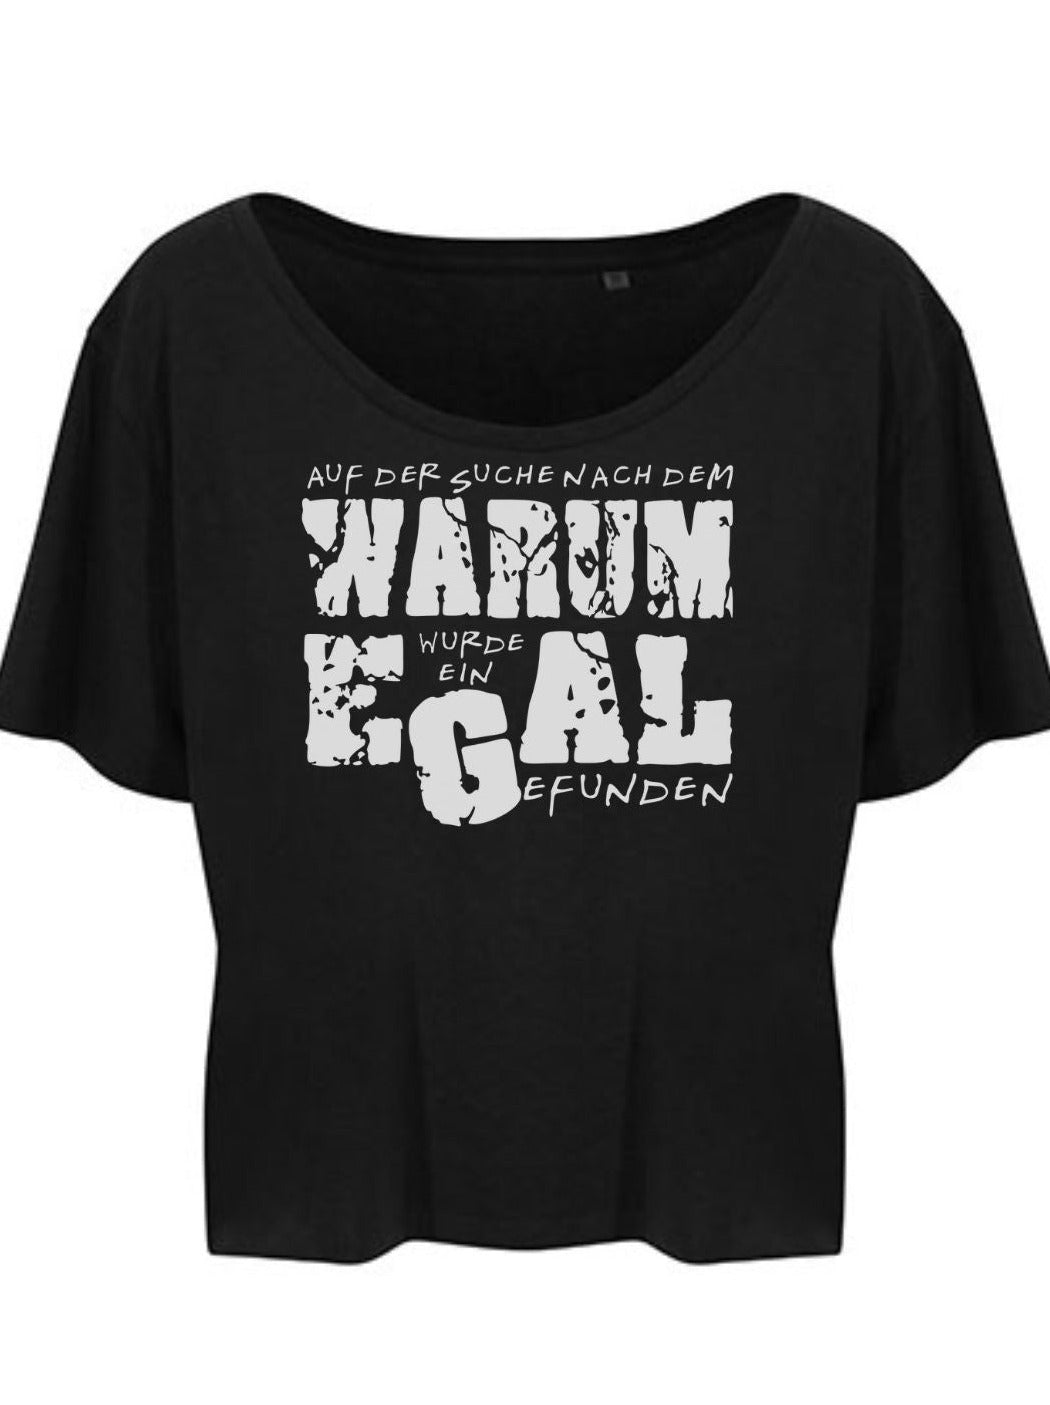 Damen T-shirt WARUM EGAL cropped schwarz